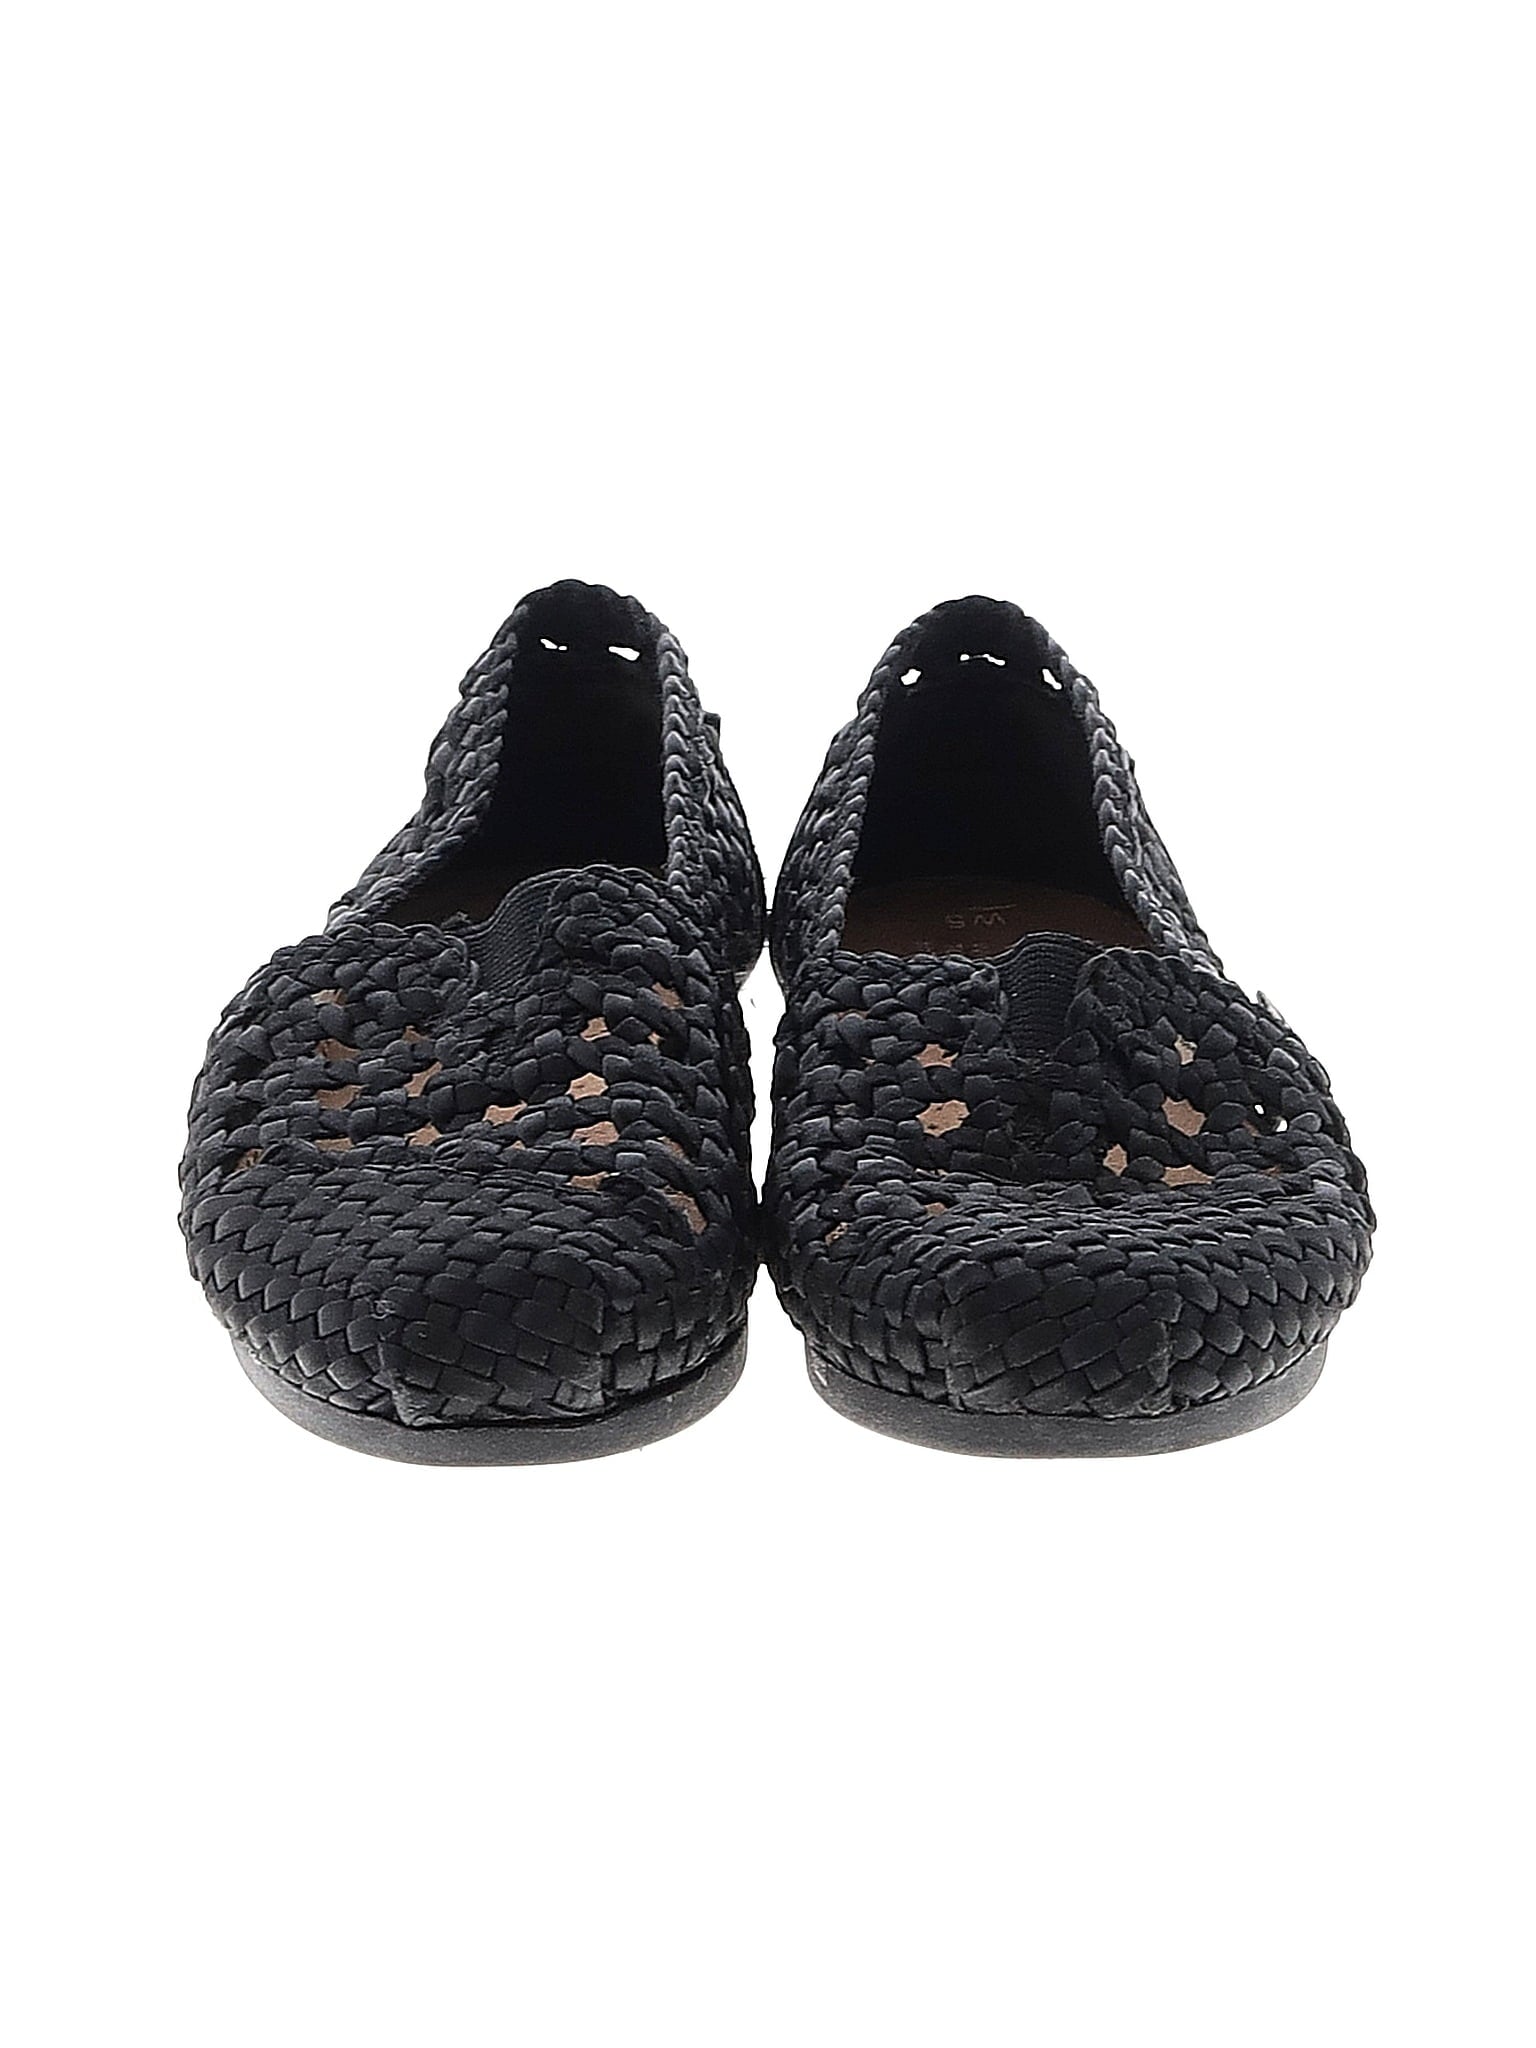 Flats shoe size - 5